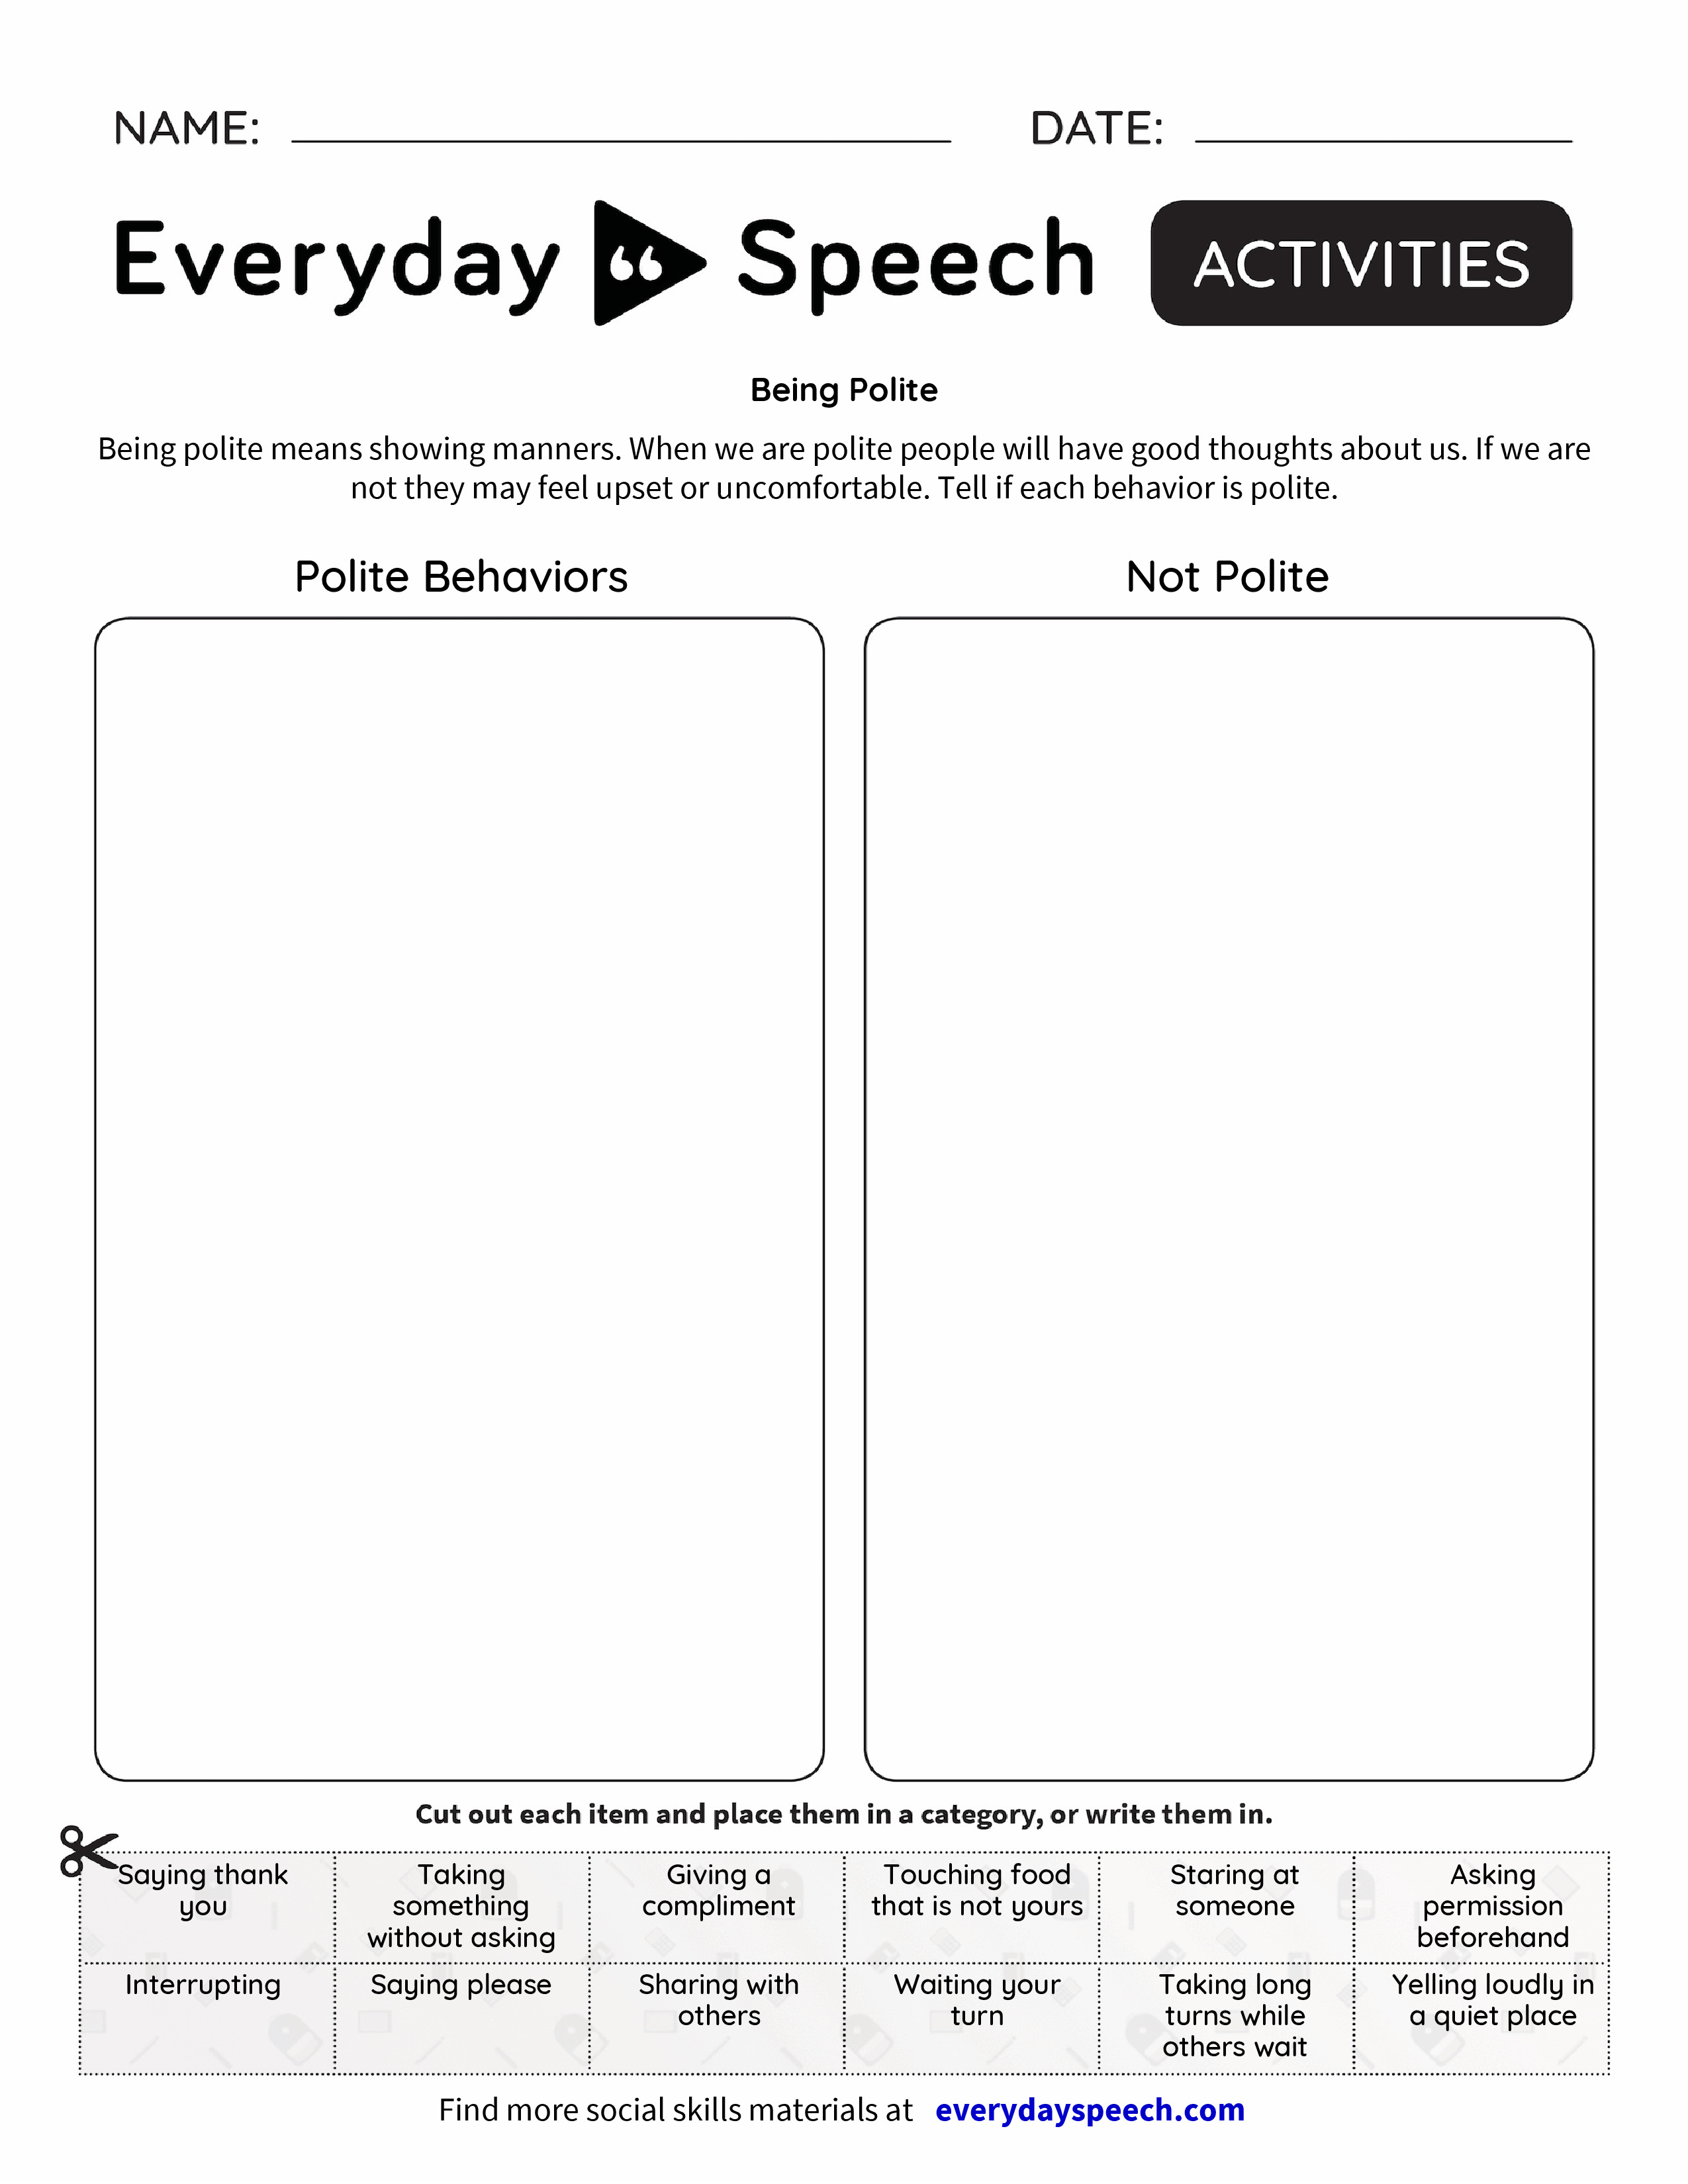 being-polite-everyday-speech-everyday-speech